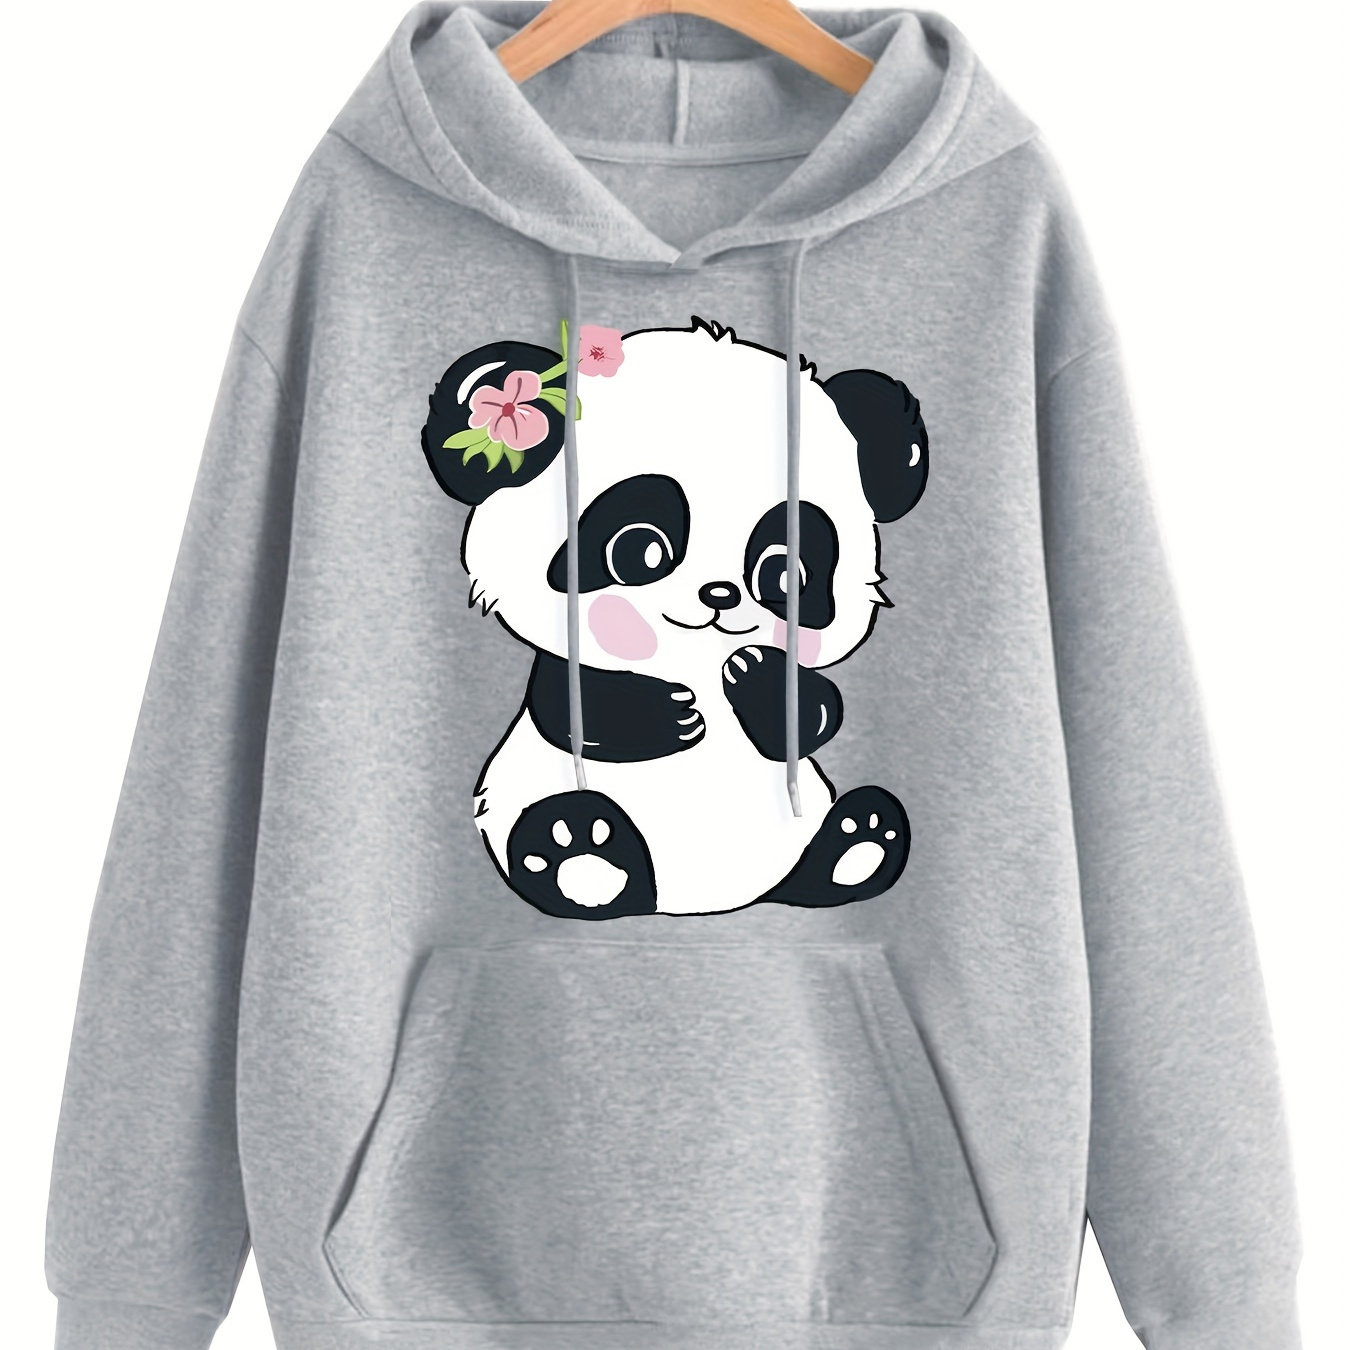 

Cartoon Panda Print Hooded Sweatshirt, Long Sleeves With Pocket Drawstring Sweatshirt, Women's Clothing